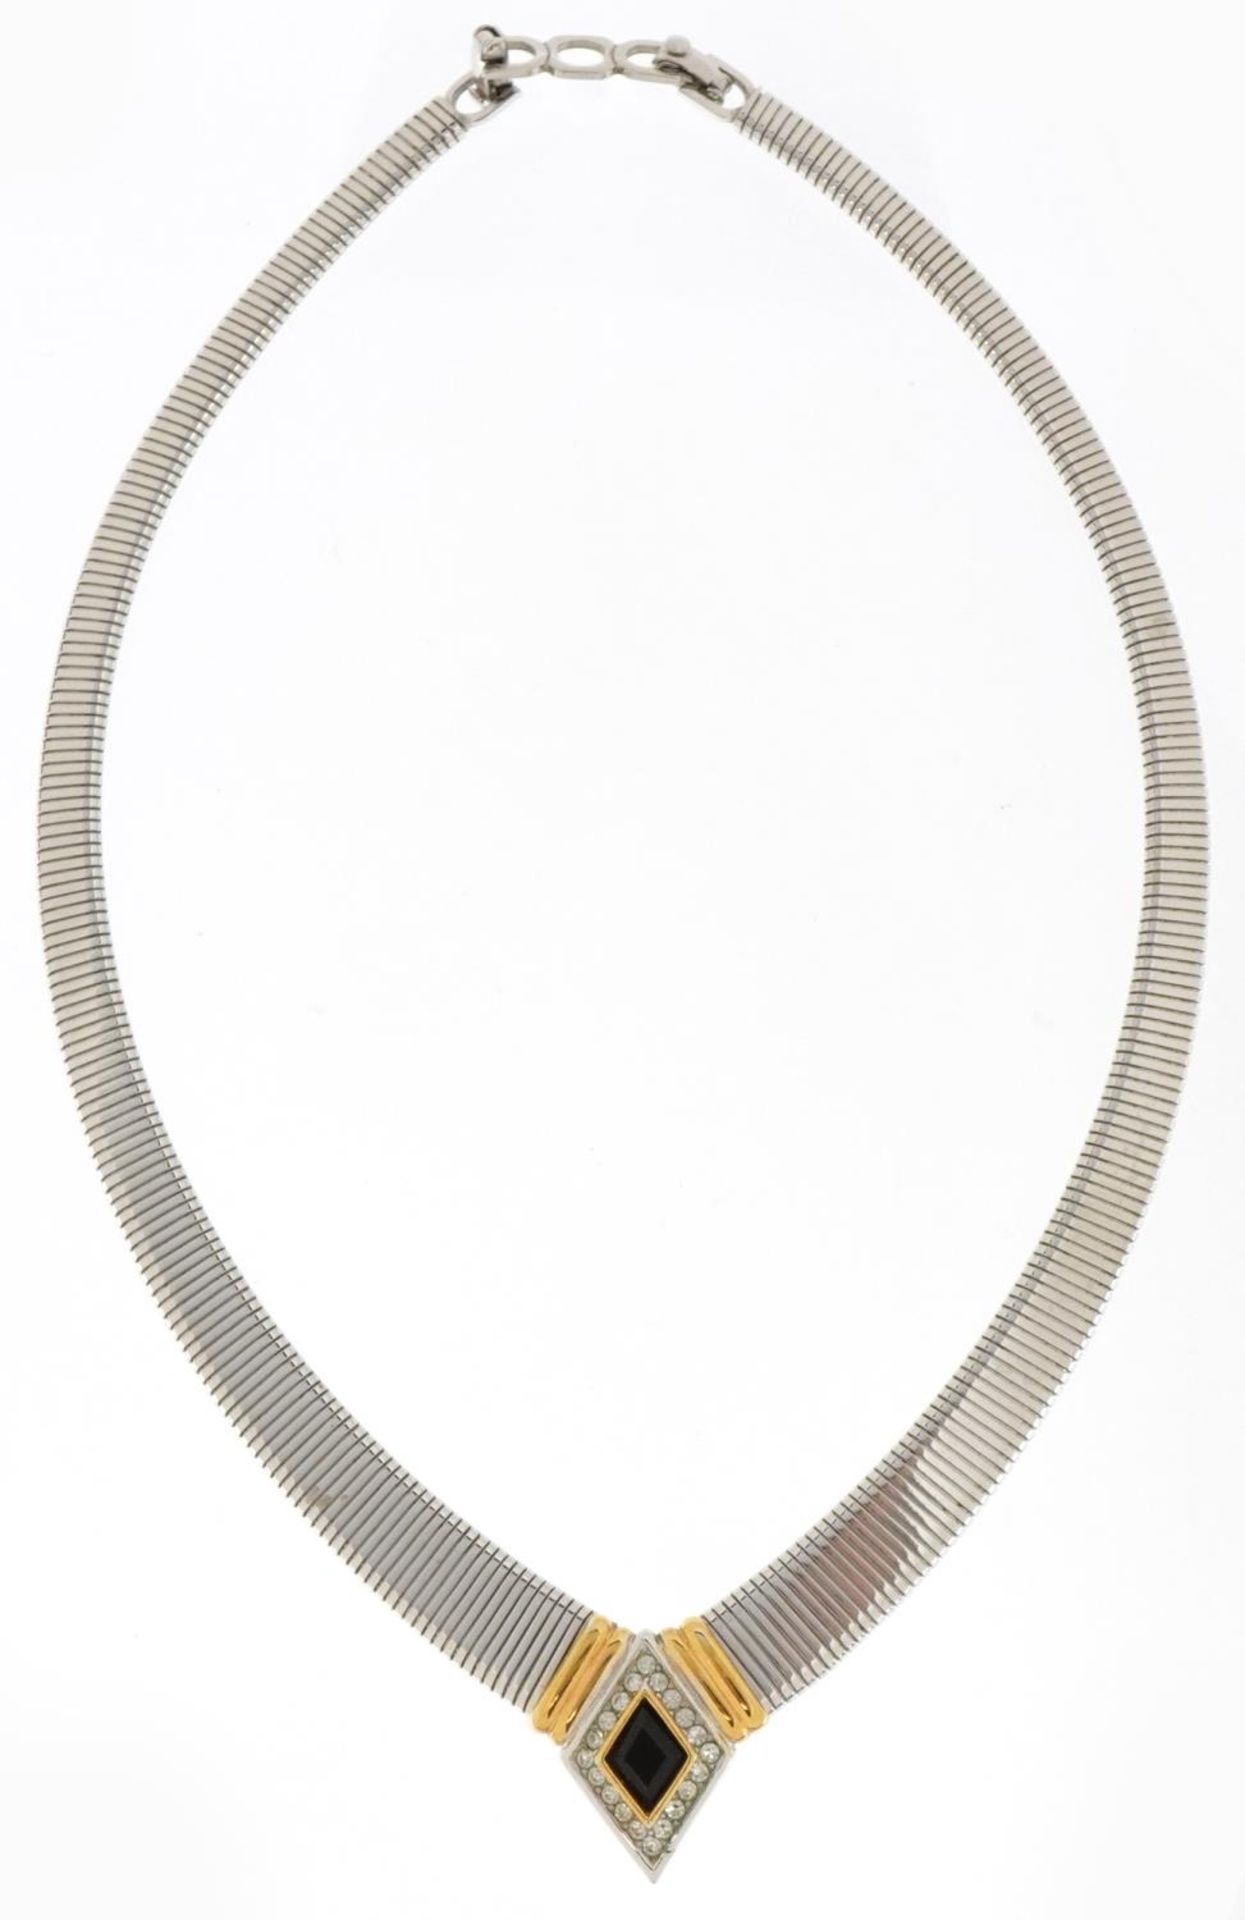 Christian Dior, vintage necklace, 40cm in length, 30.5g - Bild 2 aus 4